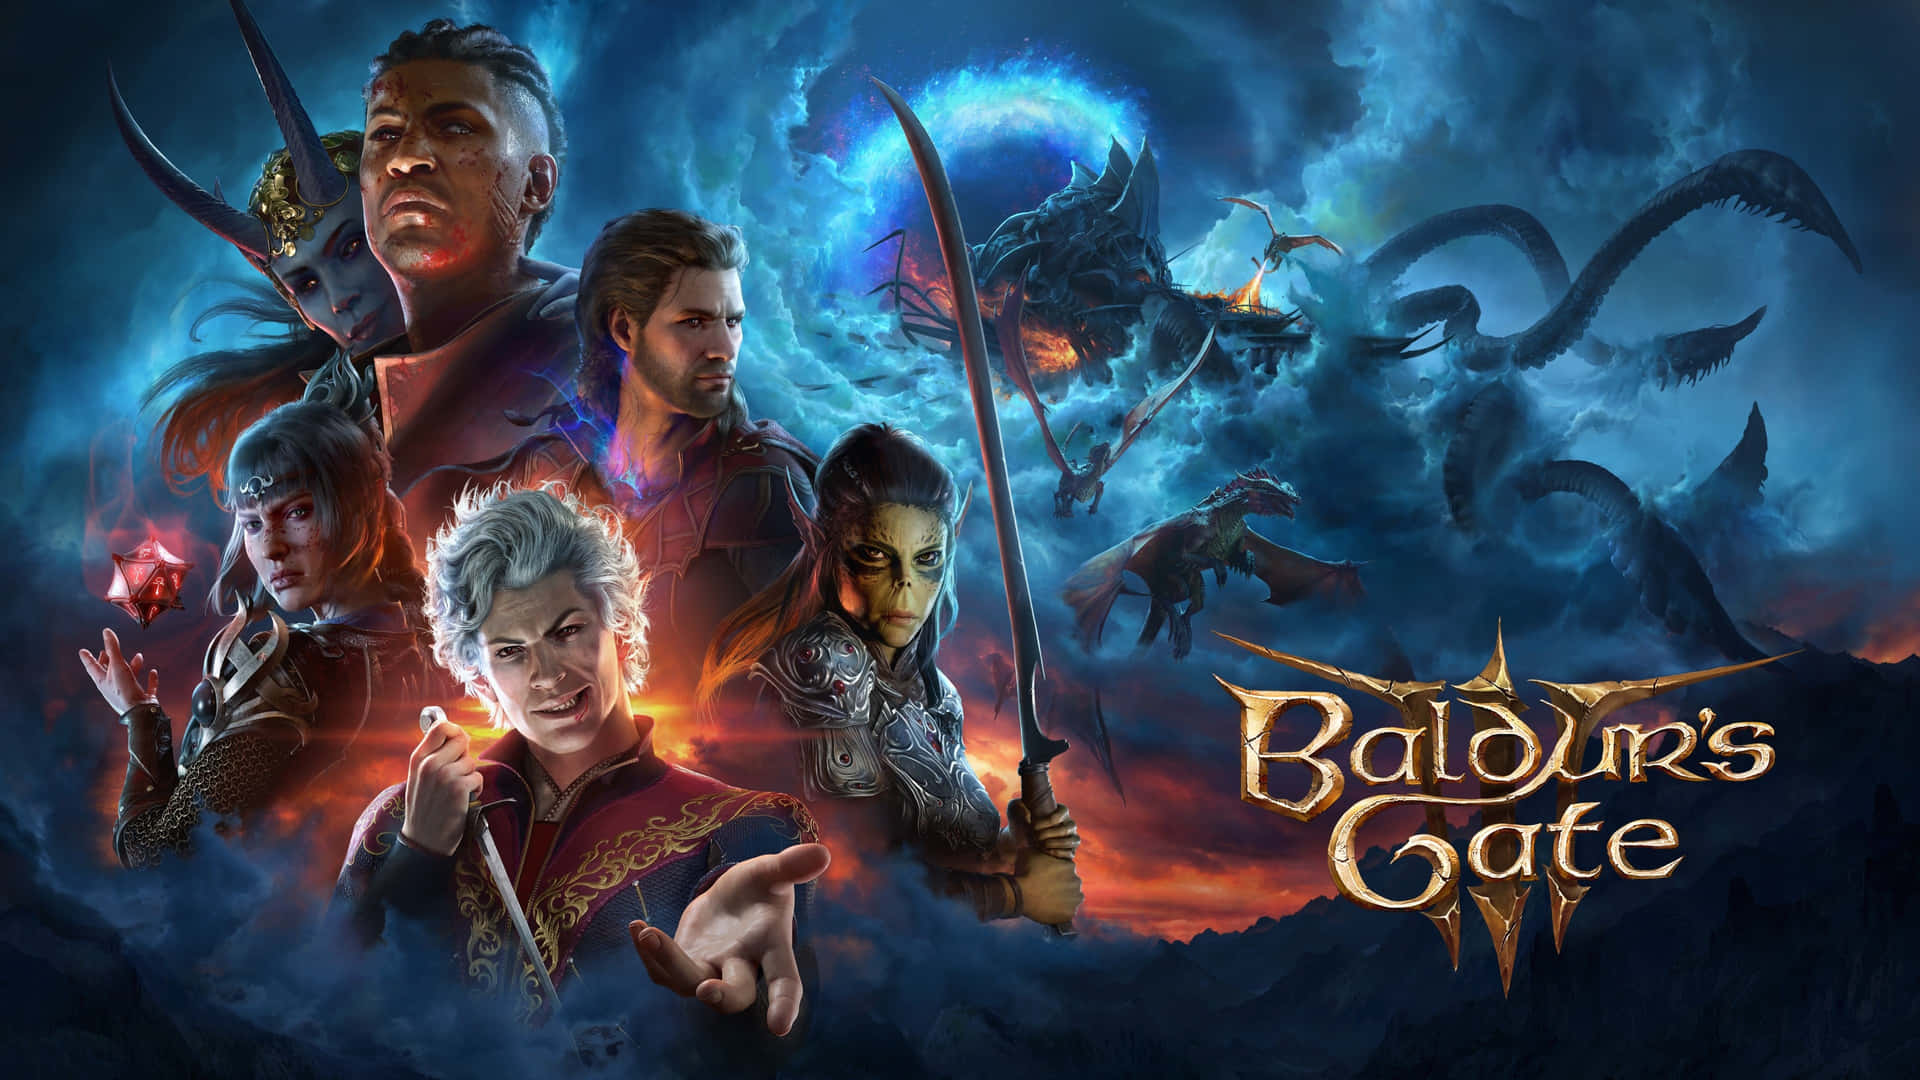 Baldurs Gate3 Character Showcase Wallpaper